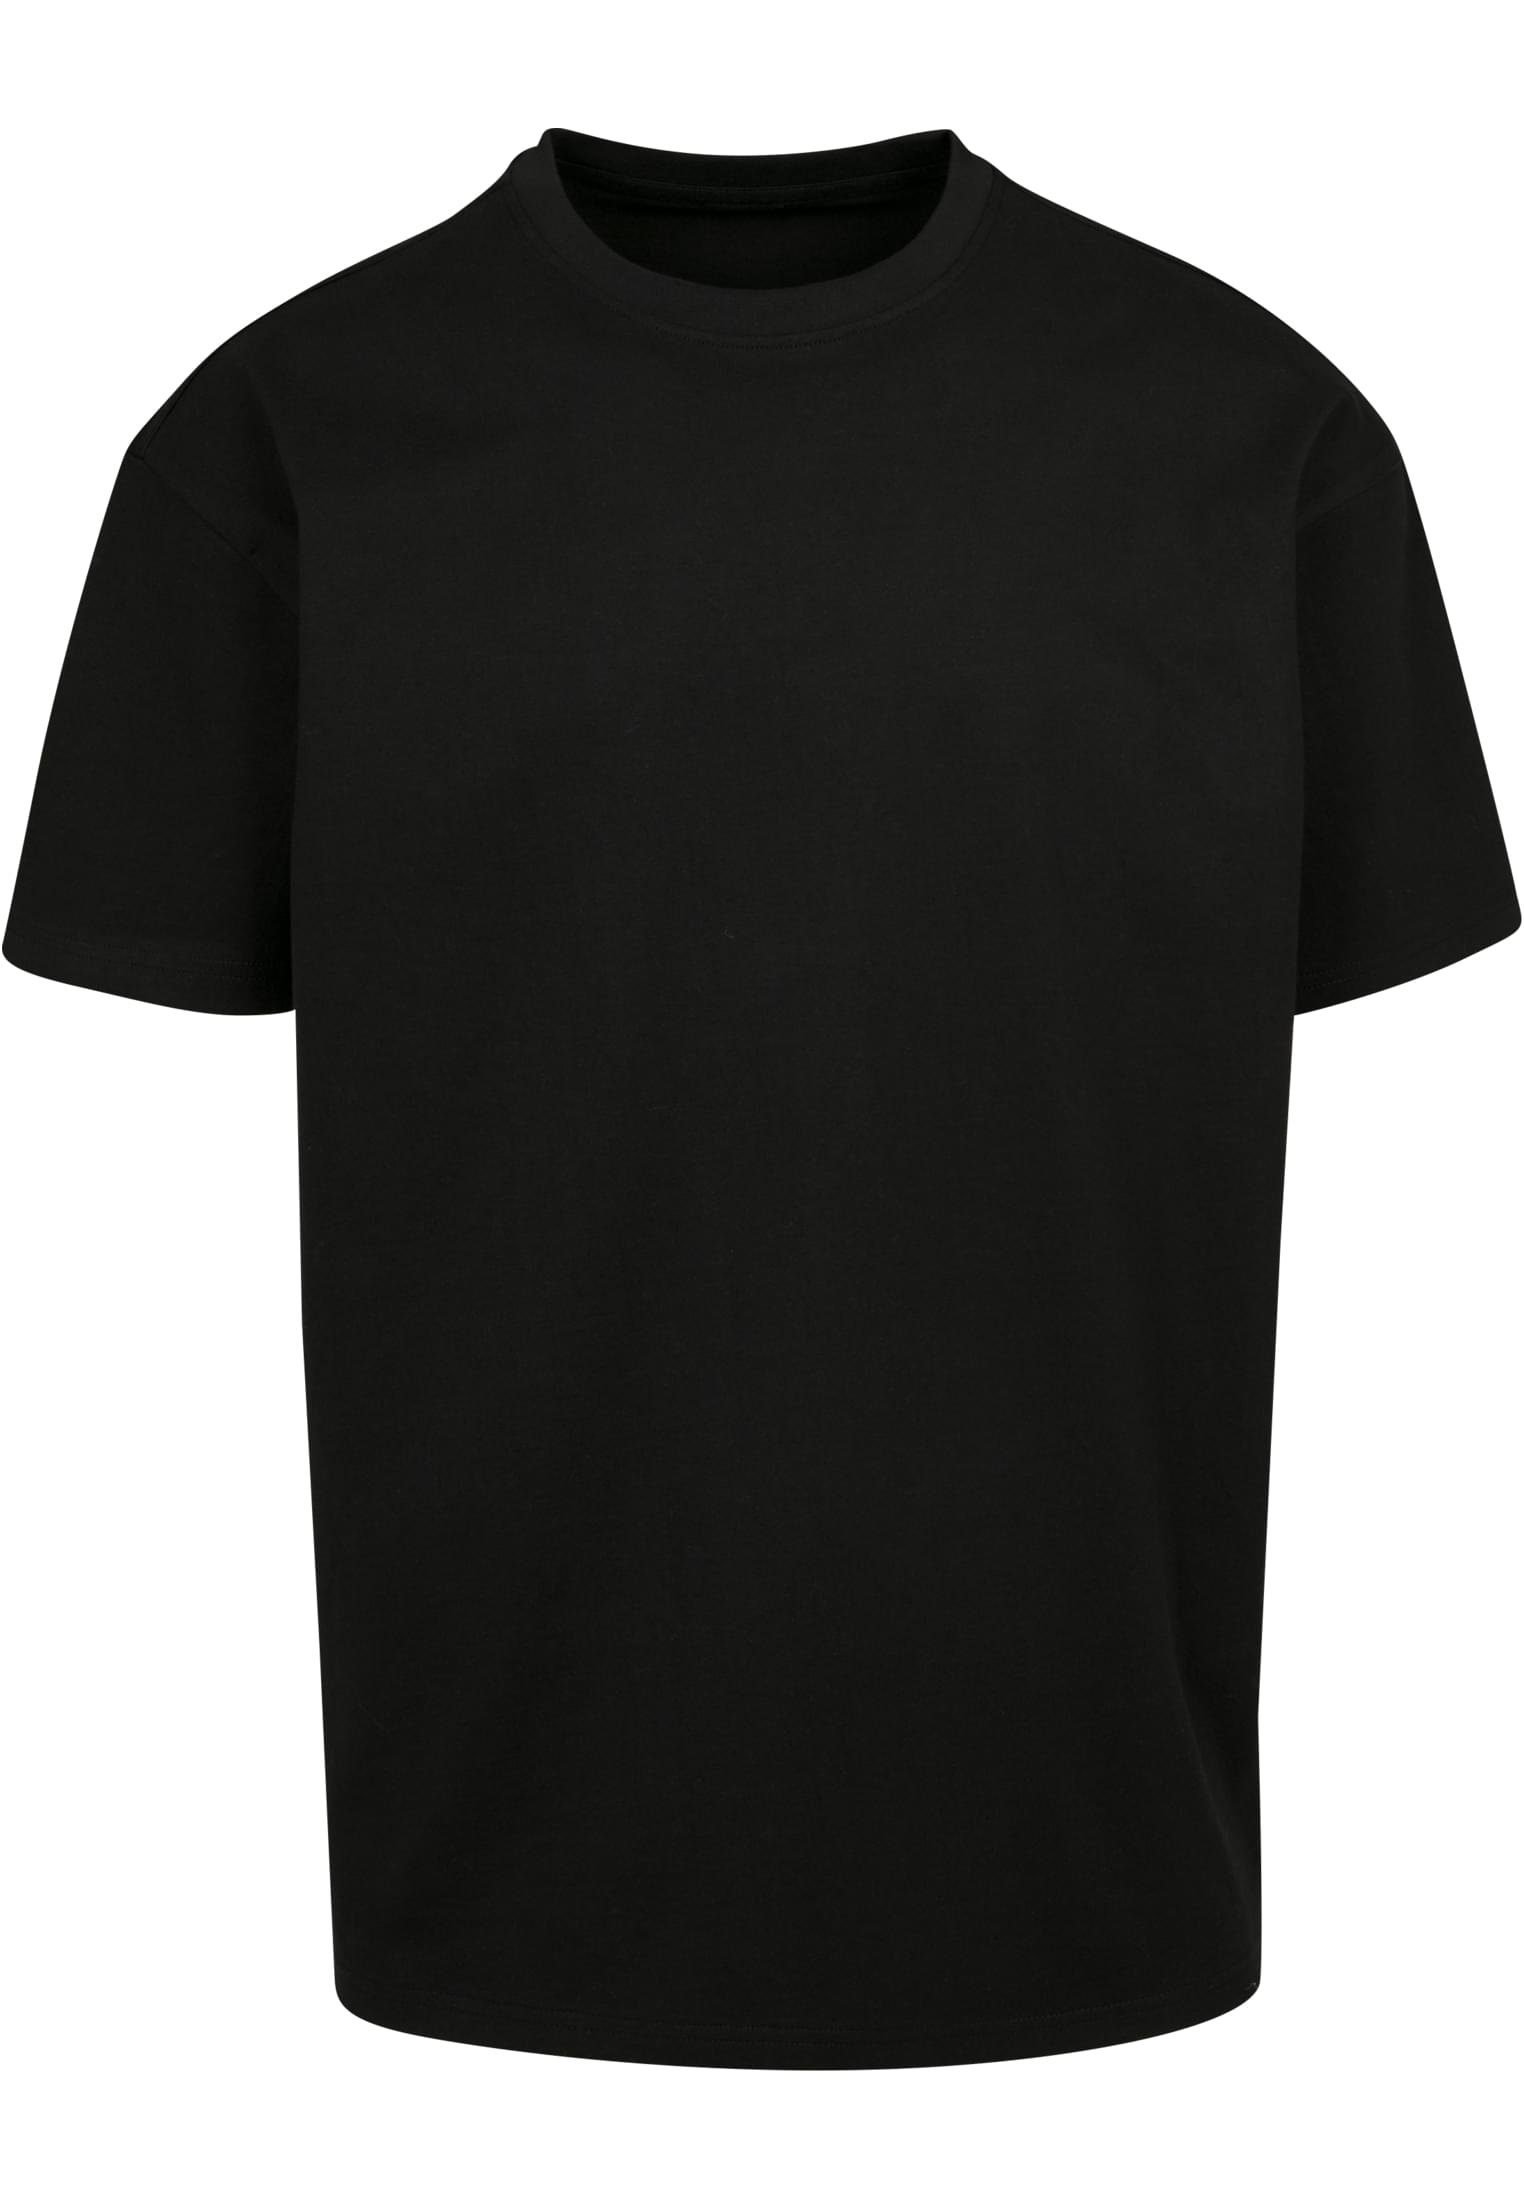 Old Herren Tee by black Irish Mob Tee T-Shirt (1-tlg) Upscale Mister Oversize